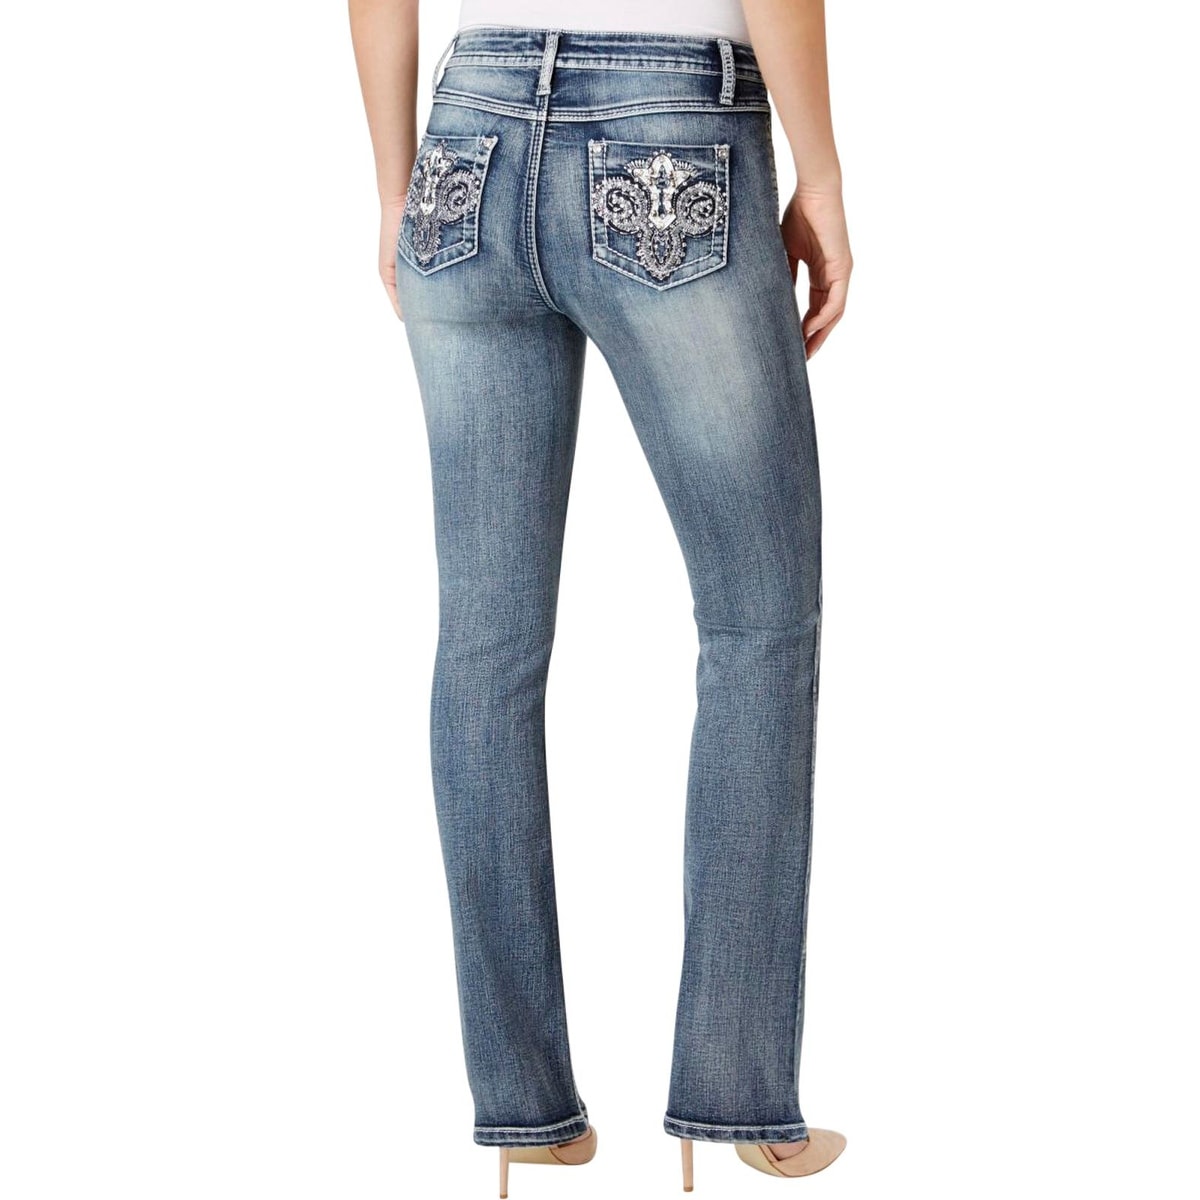 embellished bootcut jeans